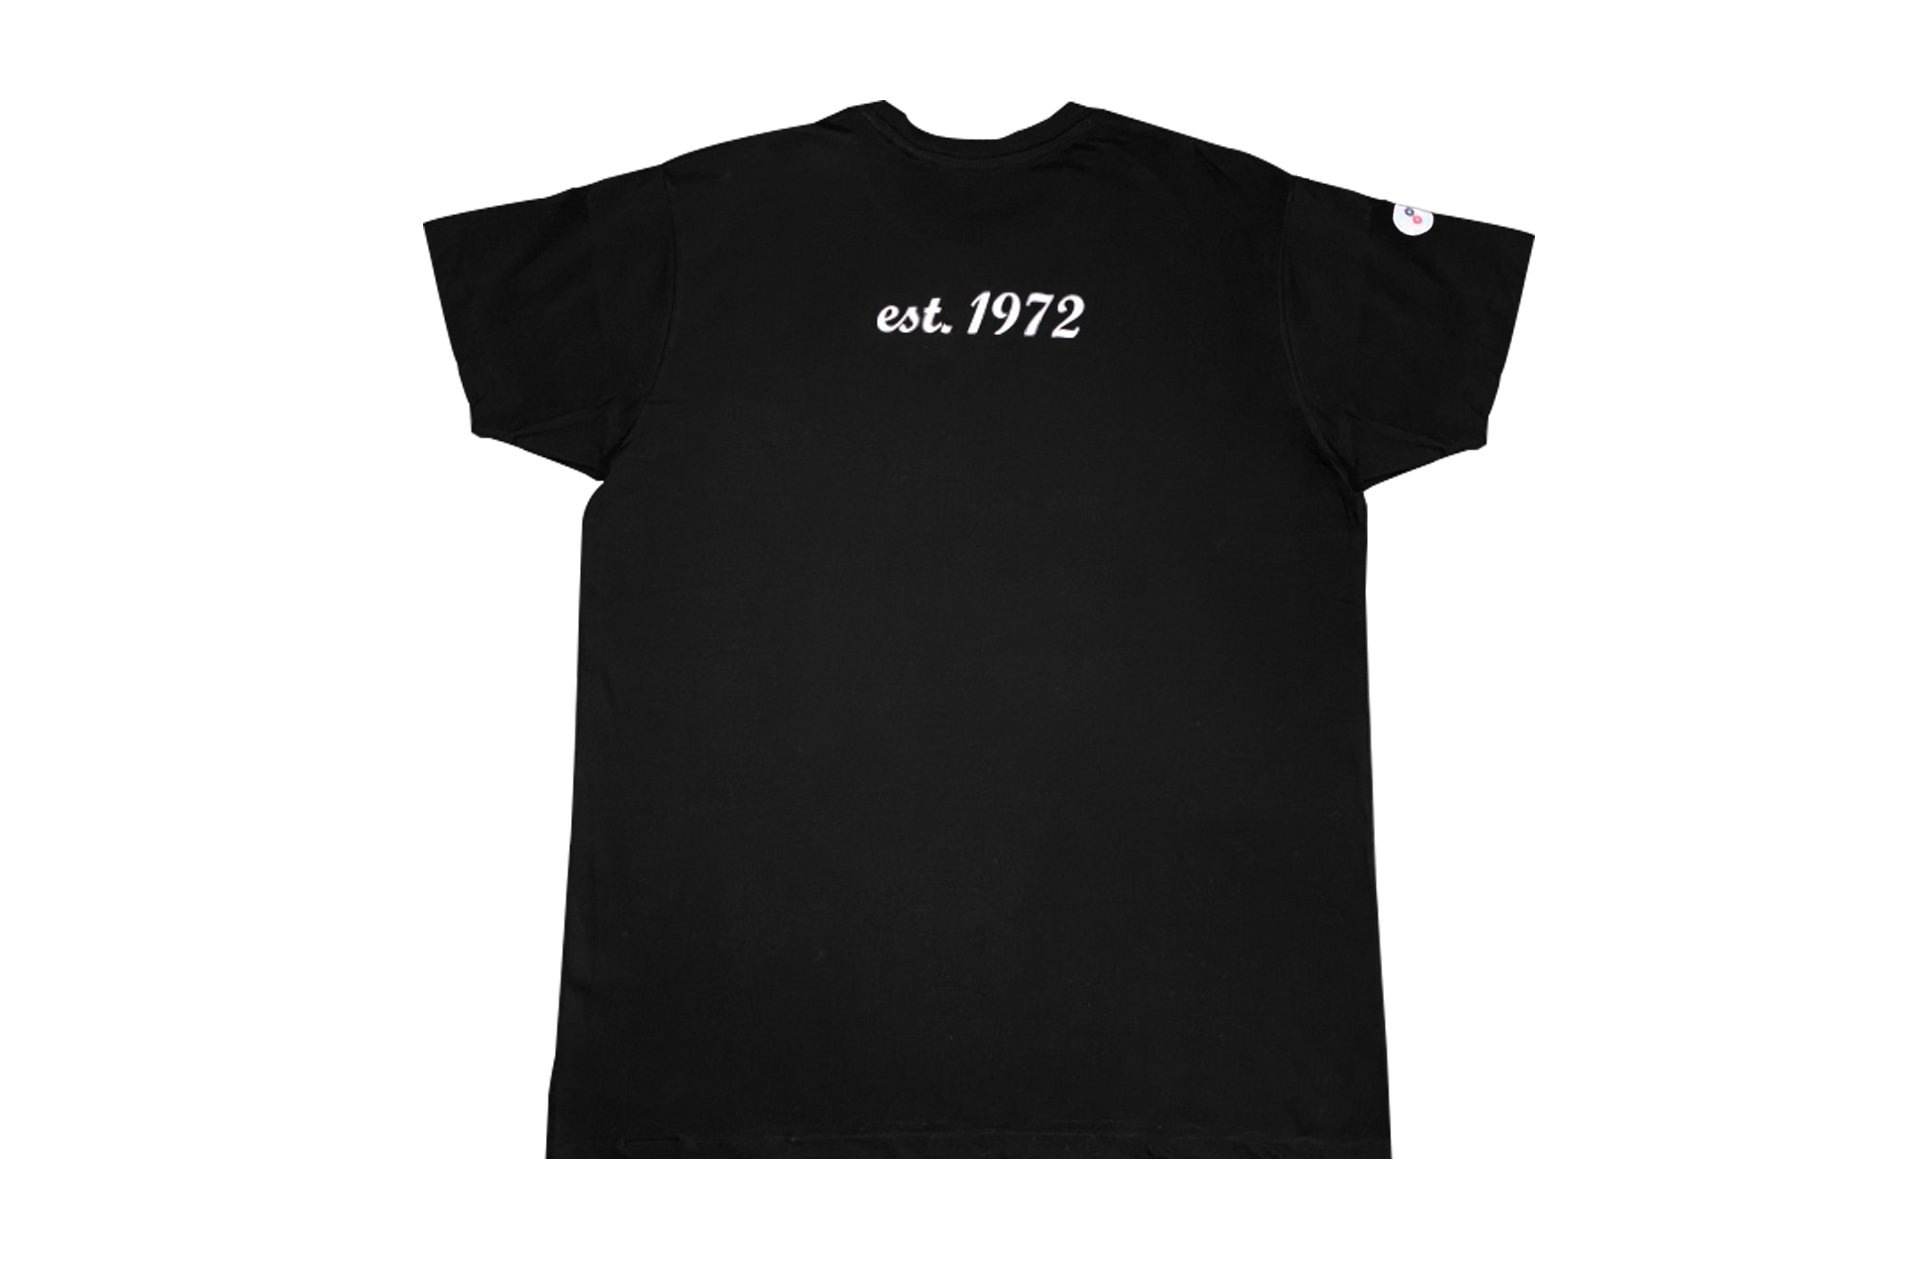 paulimot T-Shirt, schwarz, 100 % Baumwolle – XXXL